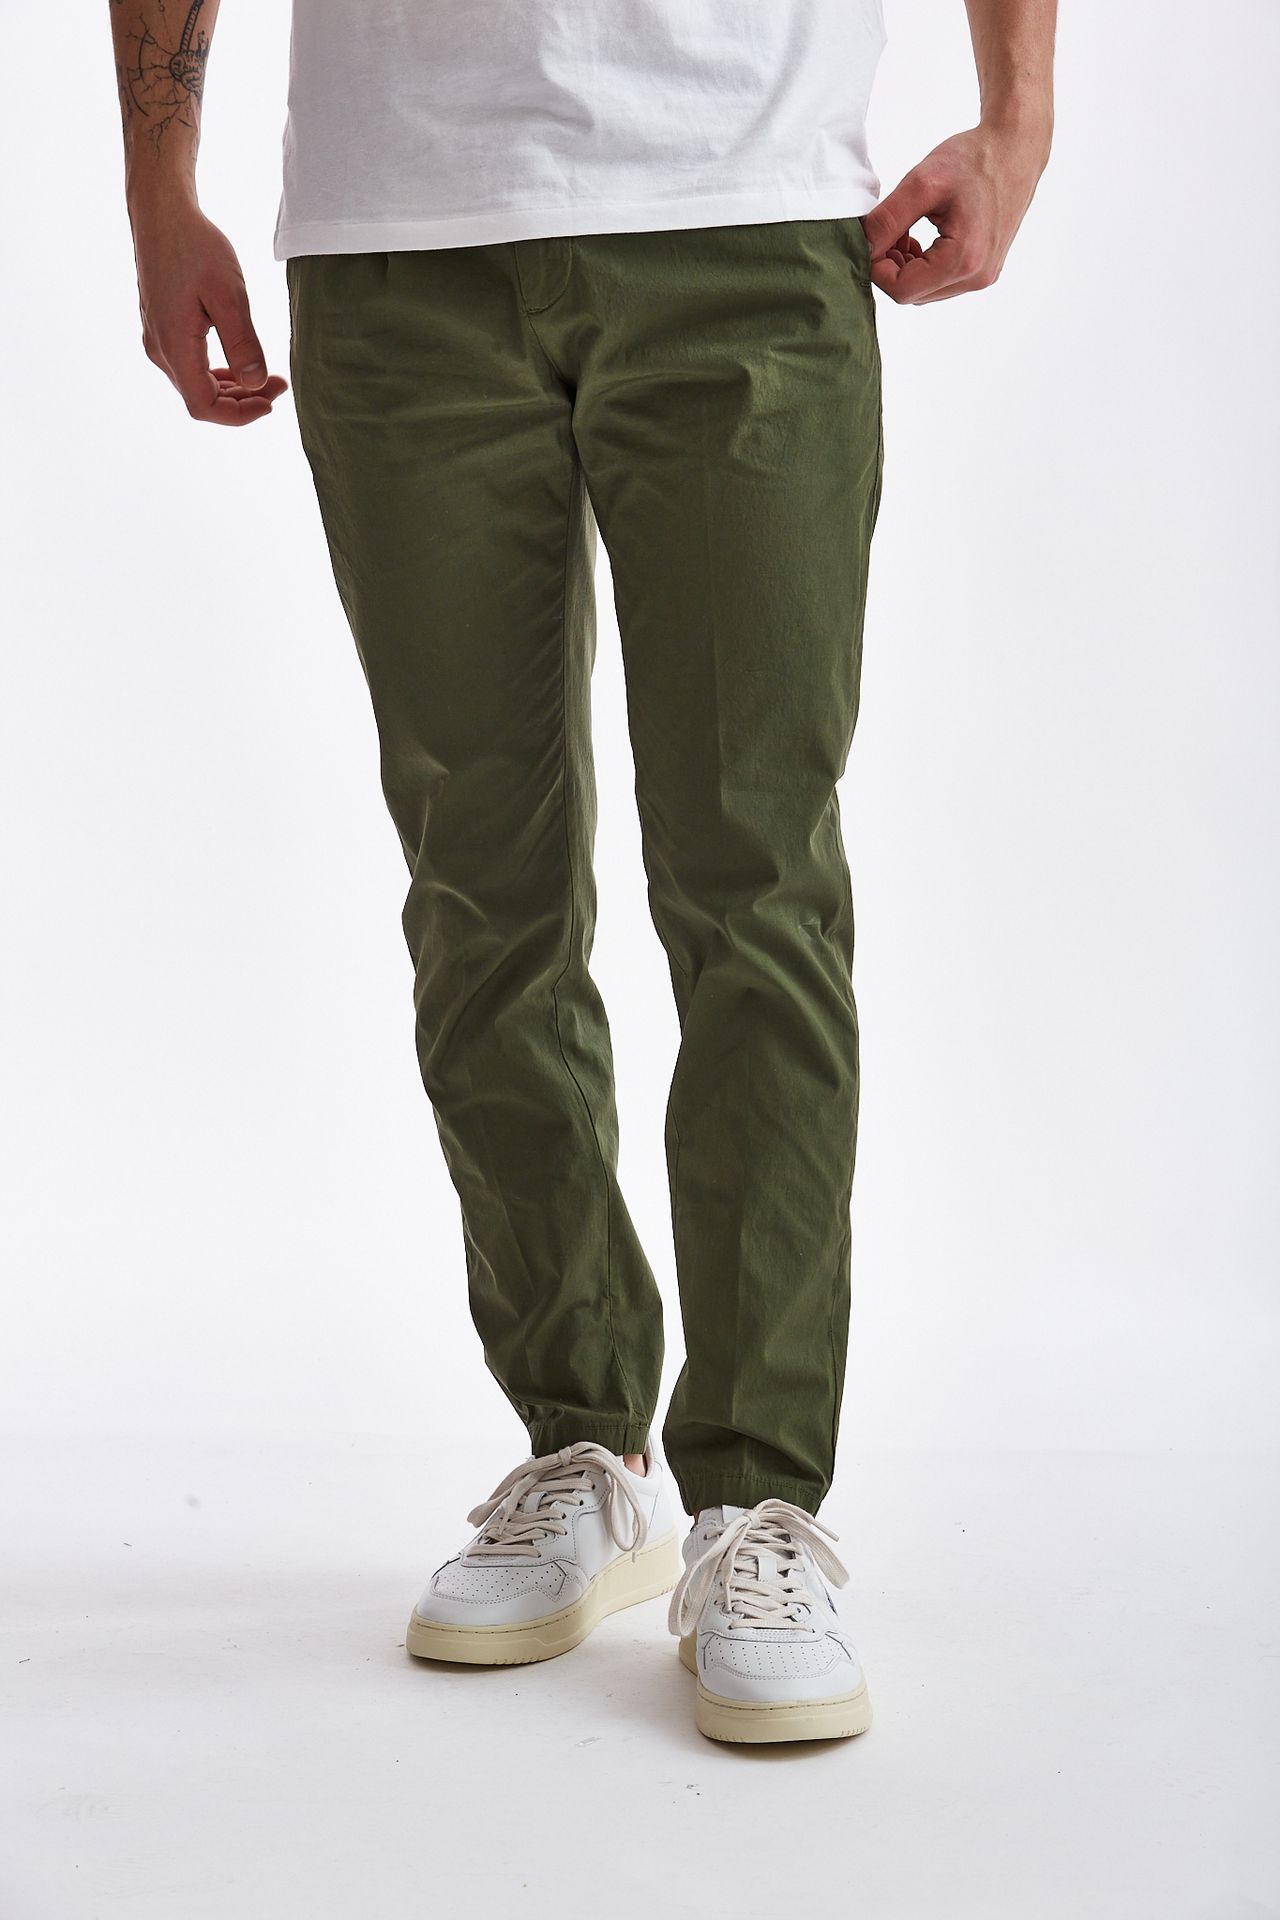 Pantalone PRINCE PENCES verde